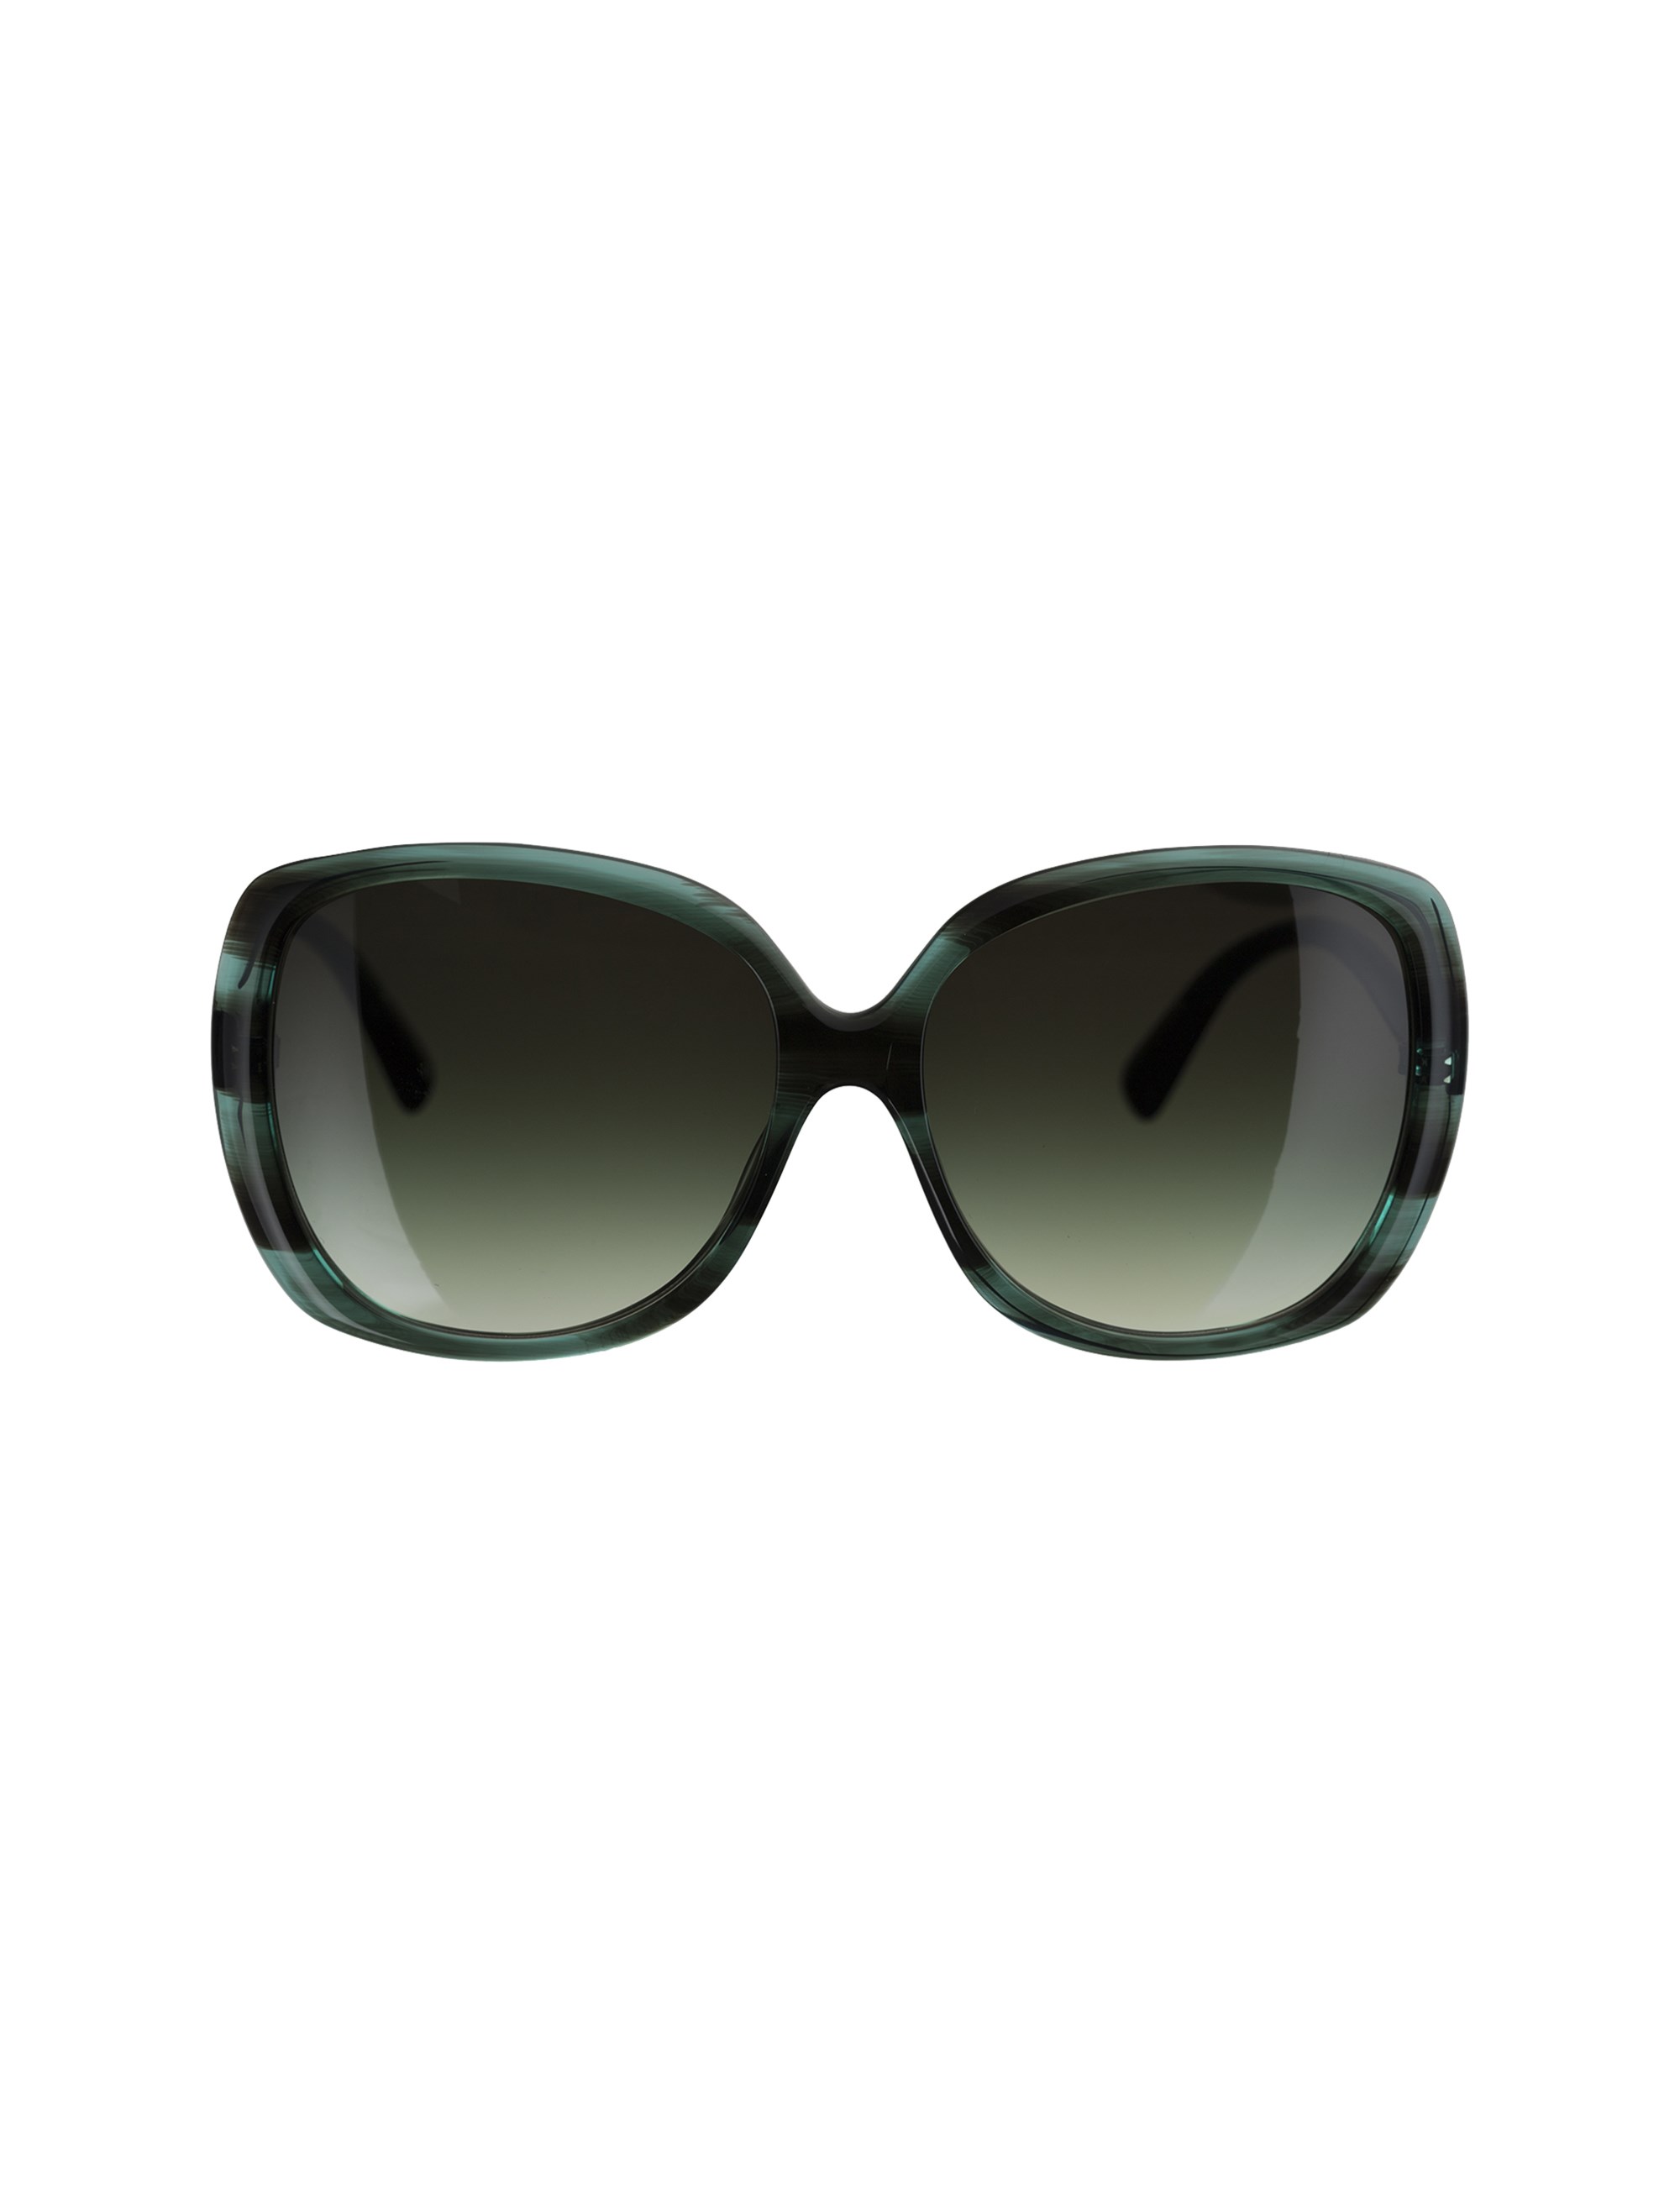 عینک آفتابی مربعی زنانه - ماریم اکو - سبز     - 1